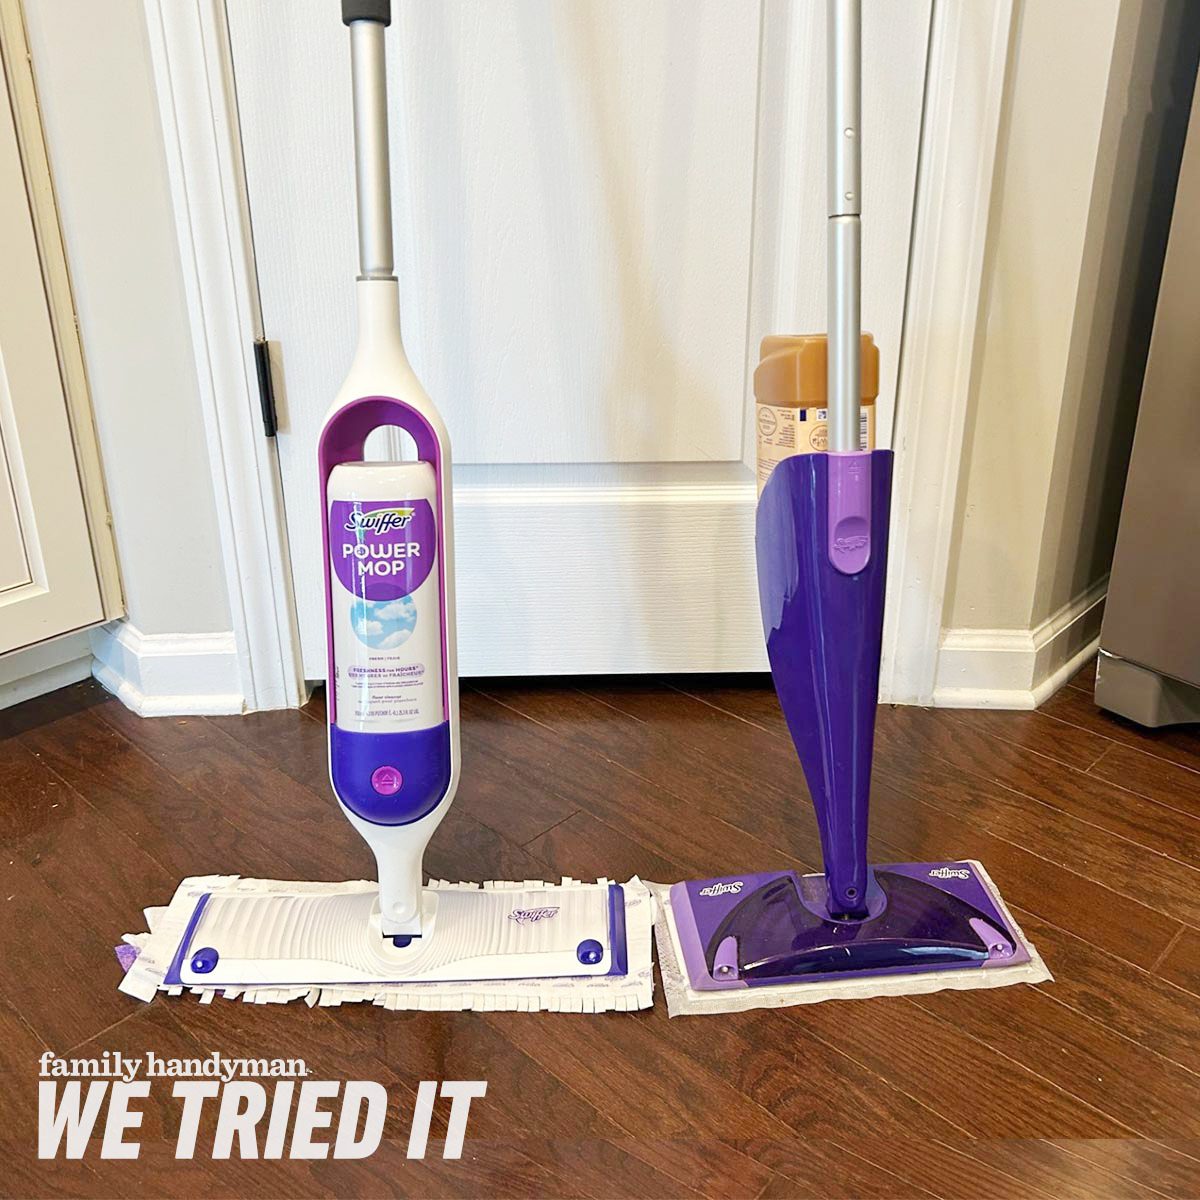 Swiffer Wetjet VS Swiffer Sweeper Floor Mop (Which is Best For Cleaning) 